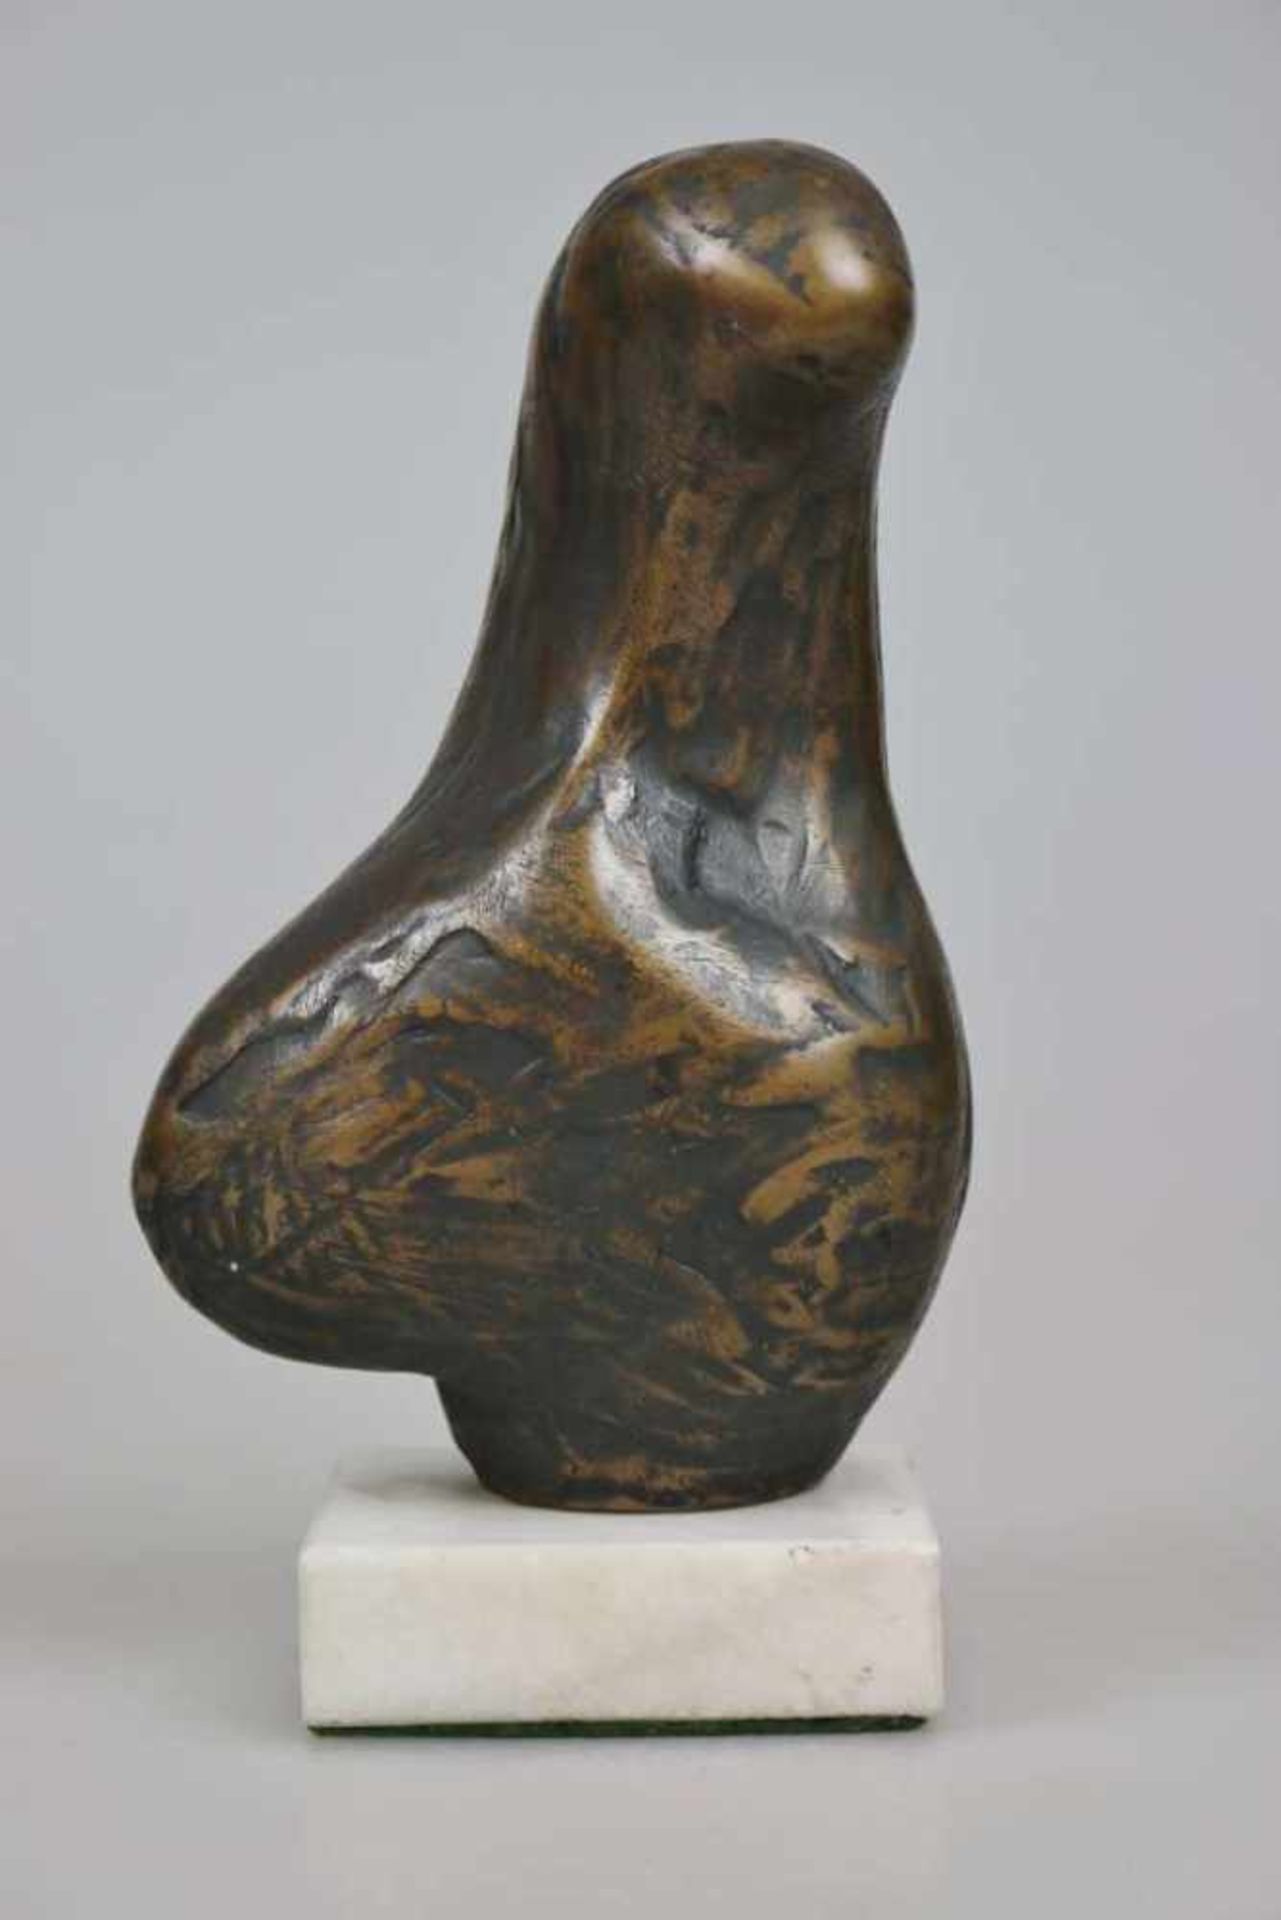 László SZABÓ (1917-1984), vollplastische Skulptur, Bronze patiniert, Hohlguß, amorphe Form, auf